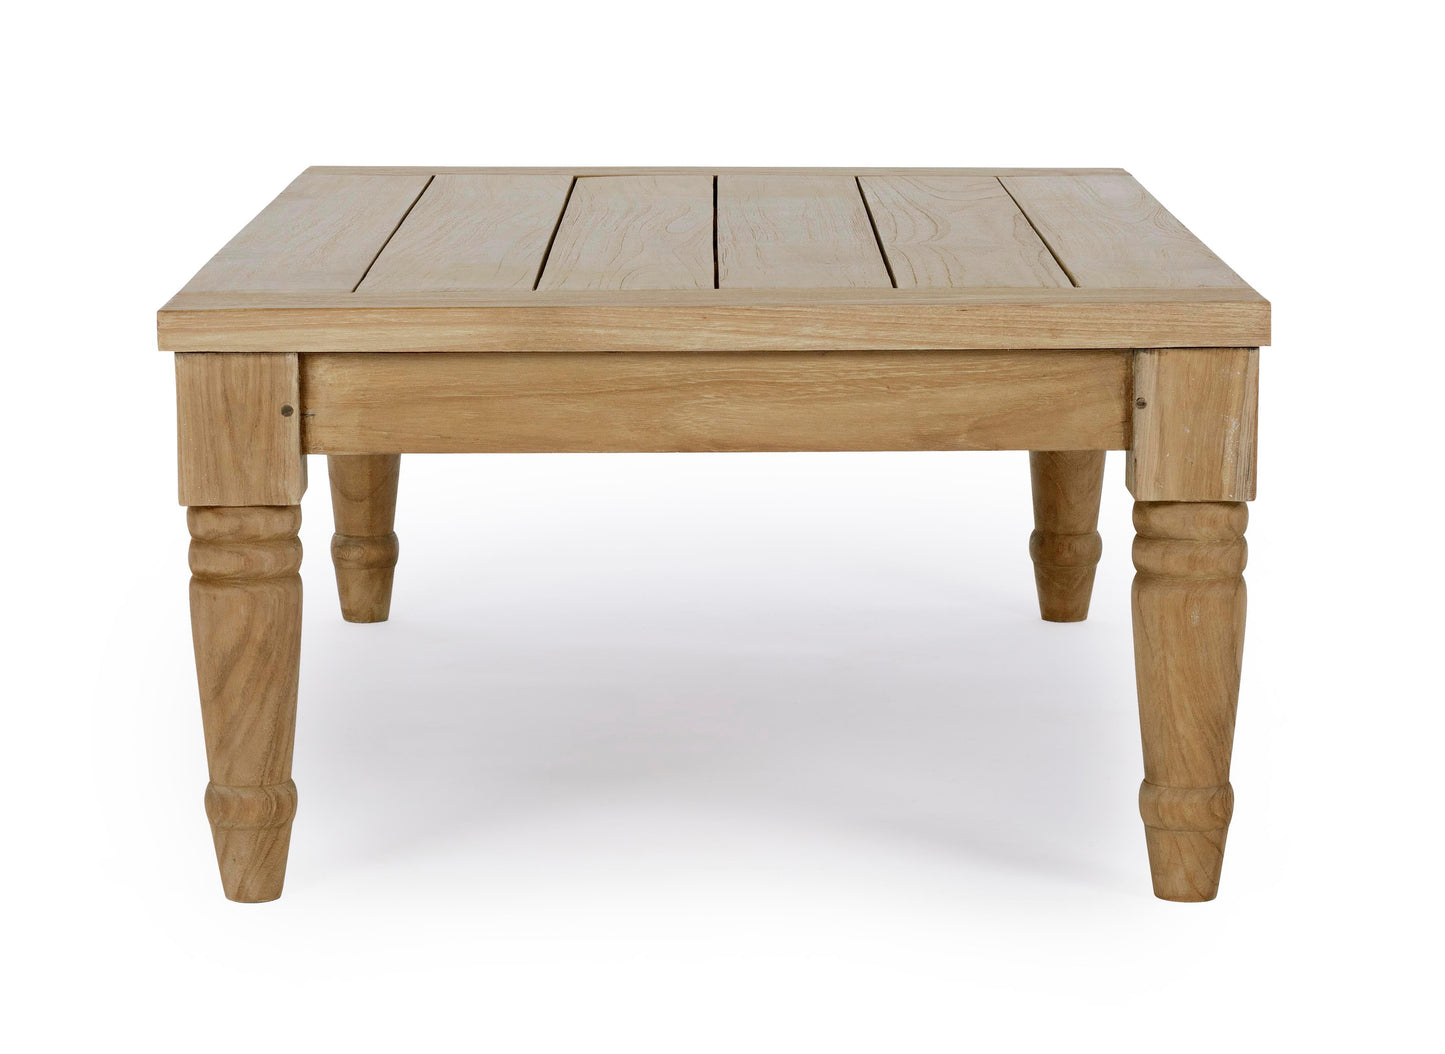 Tavolino etnico 115x65 in legno teak naturale finitura rustica - SPEDIZIONE GRATUITA- lapagoda.net